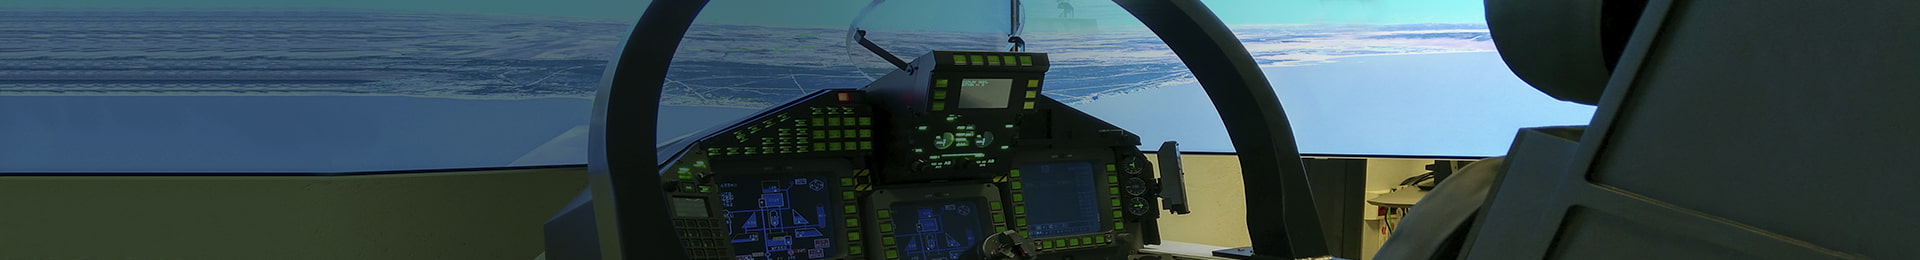 Simuladores de vuelo para aviones militares Indra Defence & Security